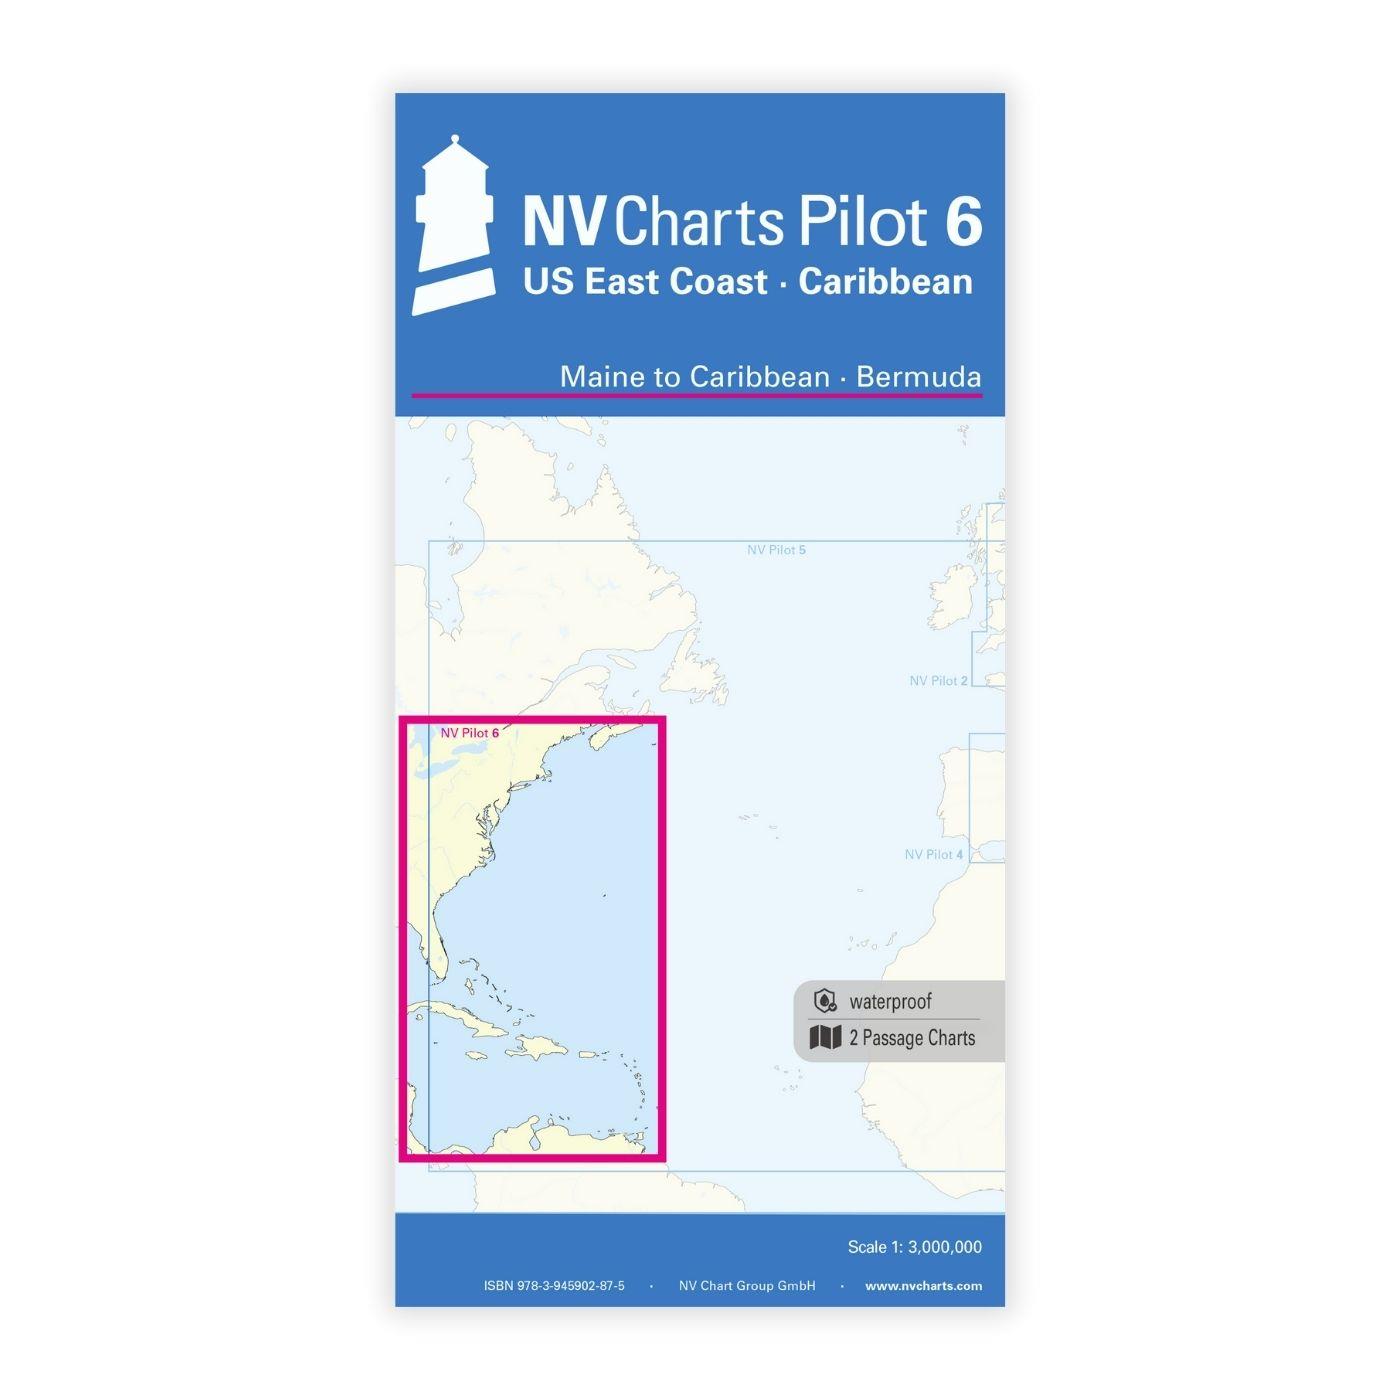 NV Charts Pilot 6 - US East Coast Maine to Caribbean • Bermuda